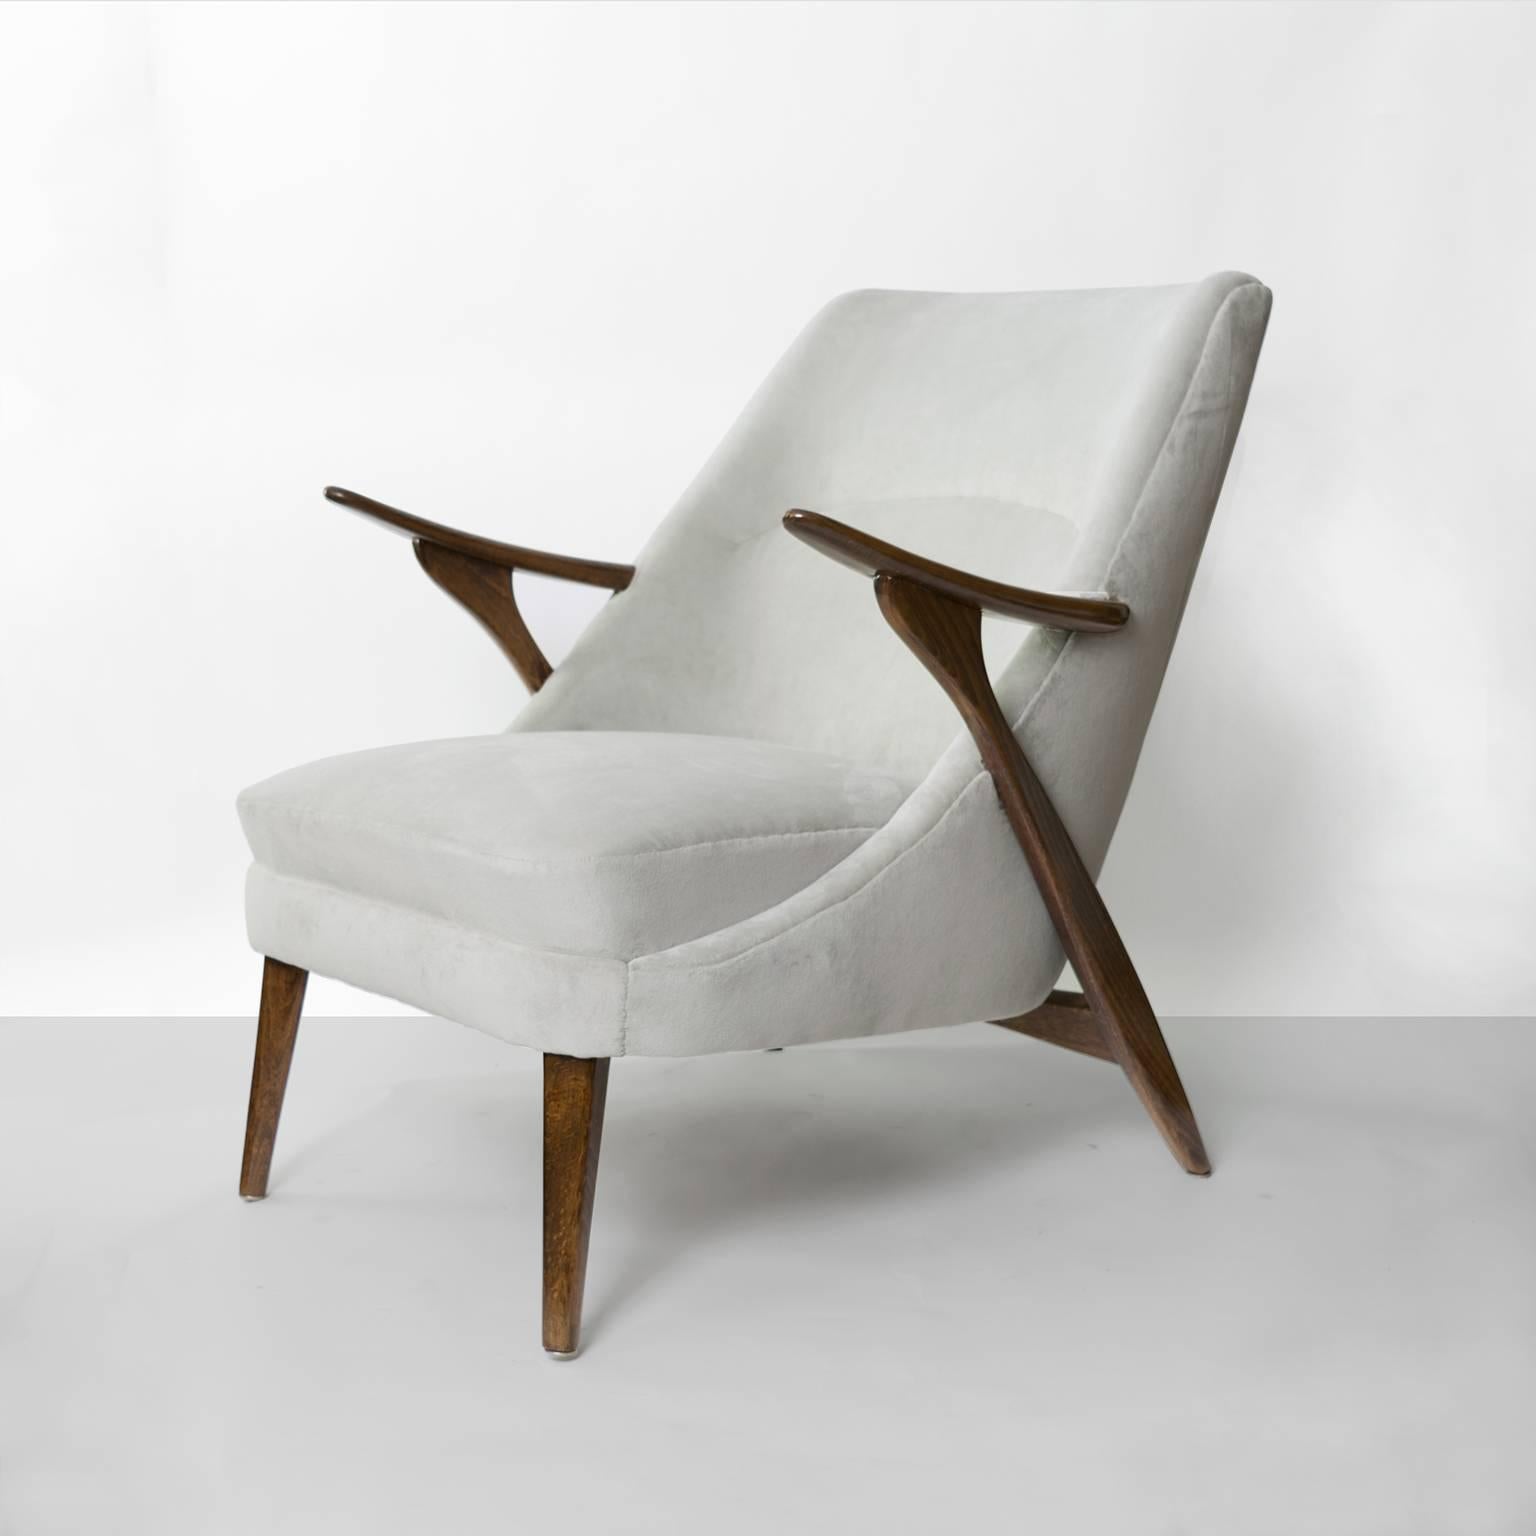 Stained Scandinavian Modern Chairs by Svante Skogh